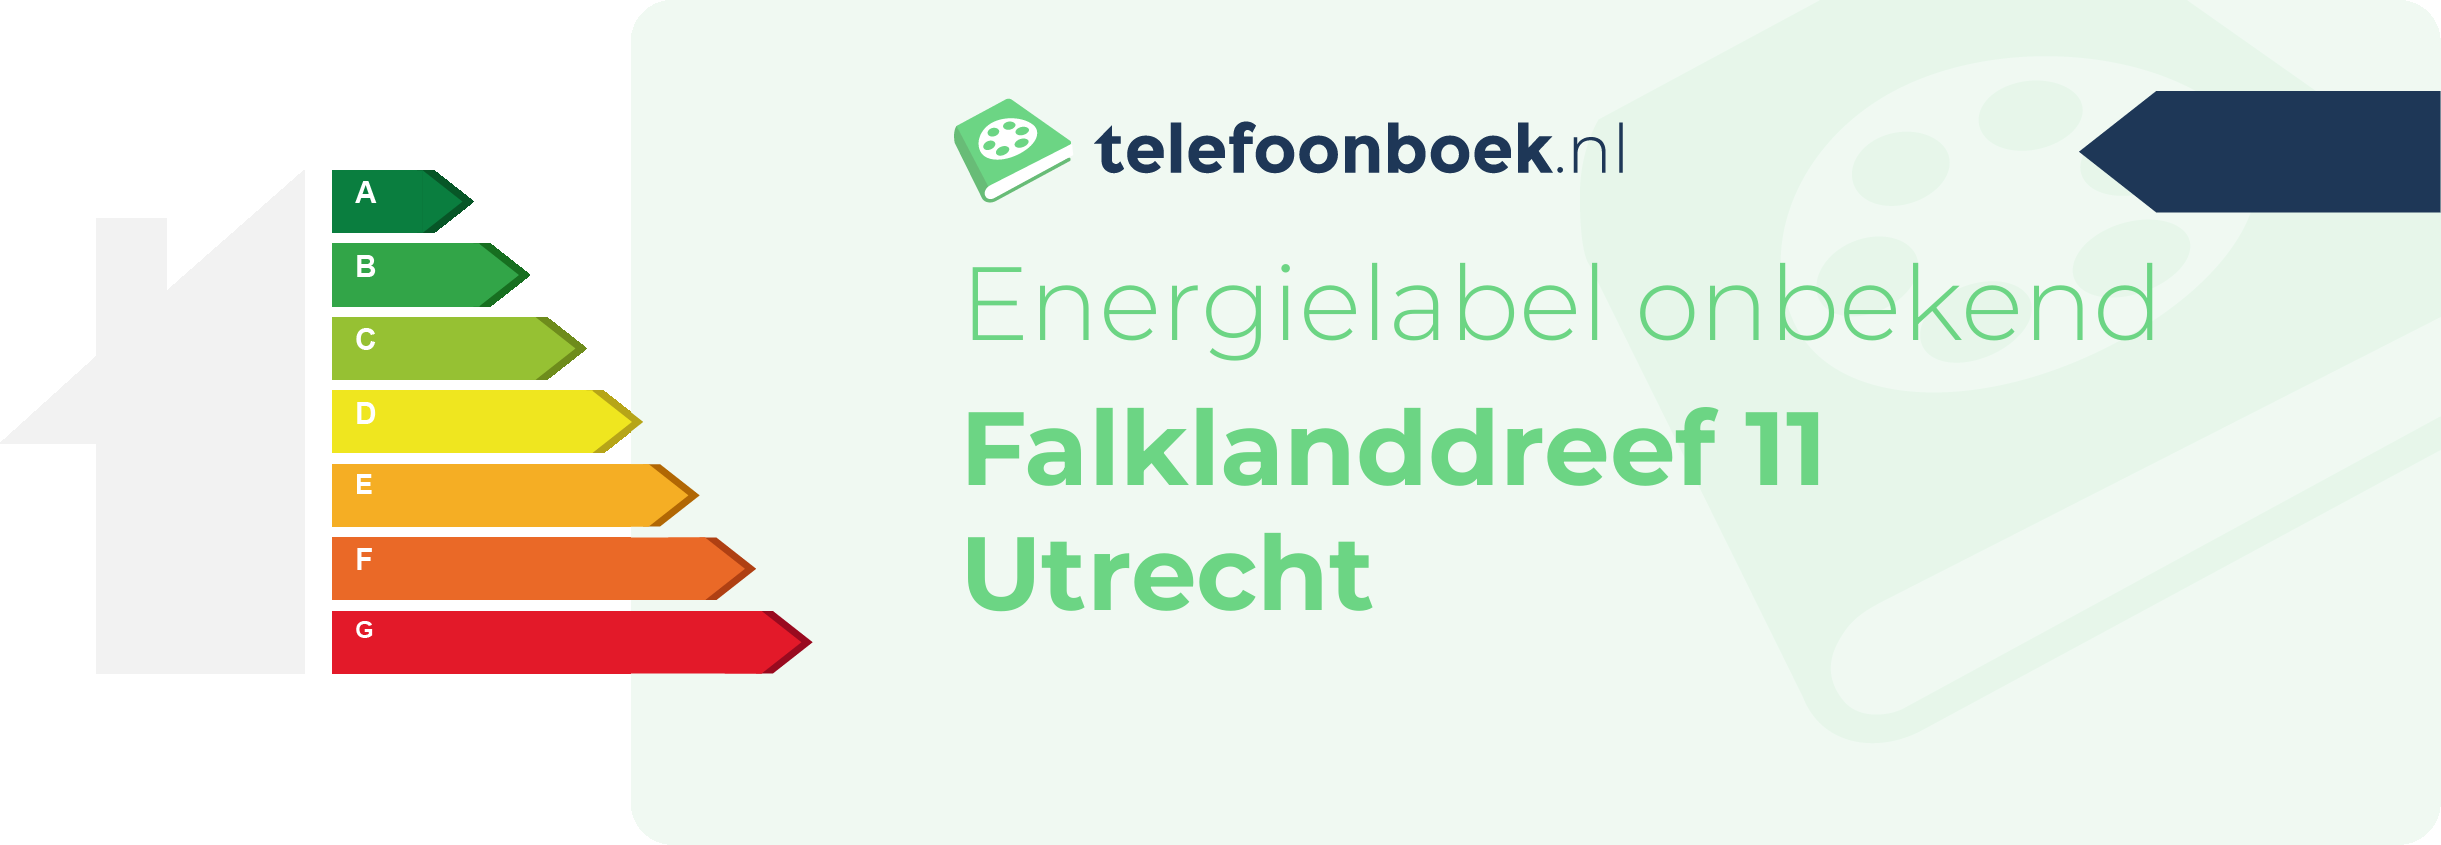 Energielabel Falklanddreef 11 Utrecht